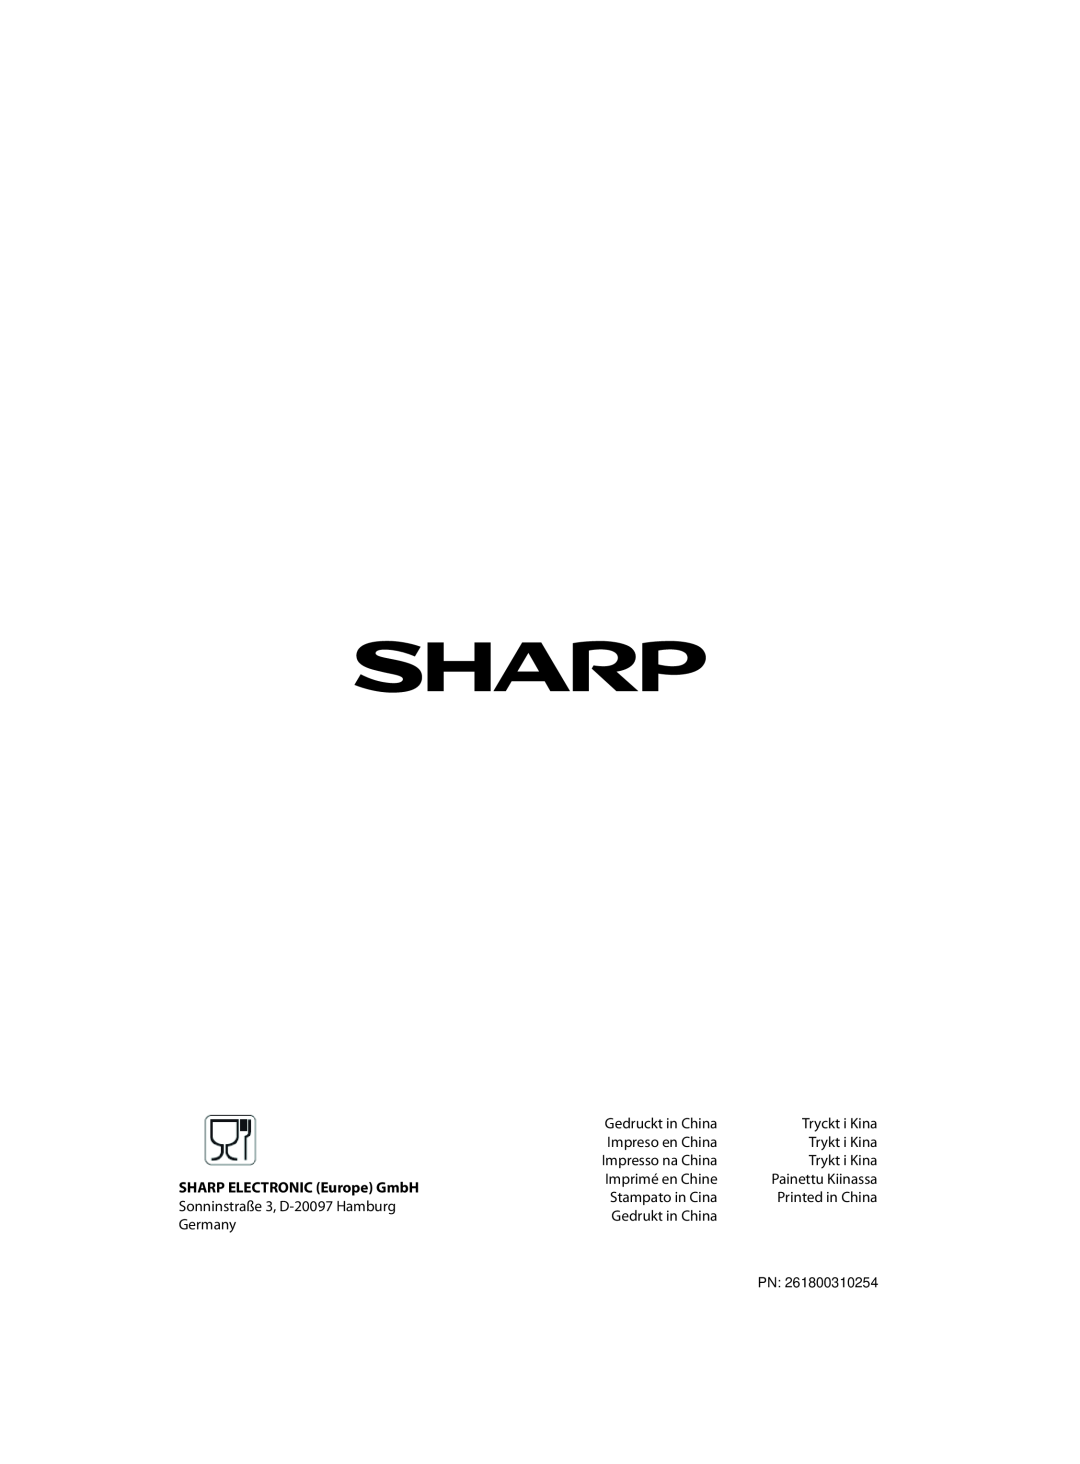 Sharp R-342, R-242 SHARP ELECTRONIC Europe GmbH, Gedruckt in China, Impreso en China, Imprimé en Chine, Stampato in Cina 